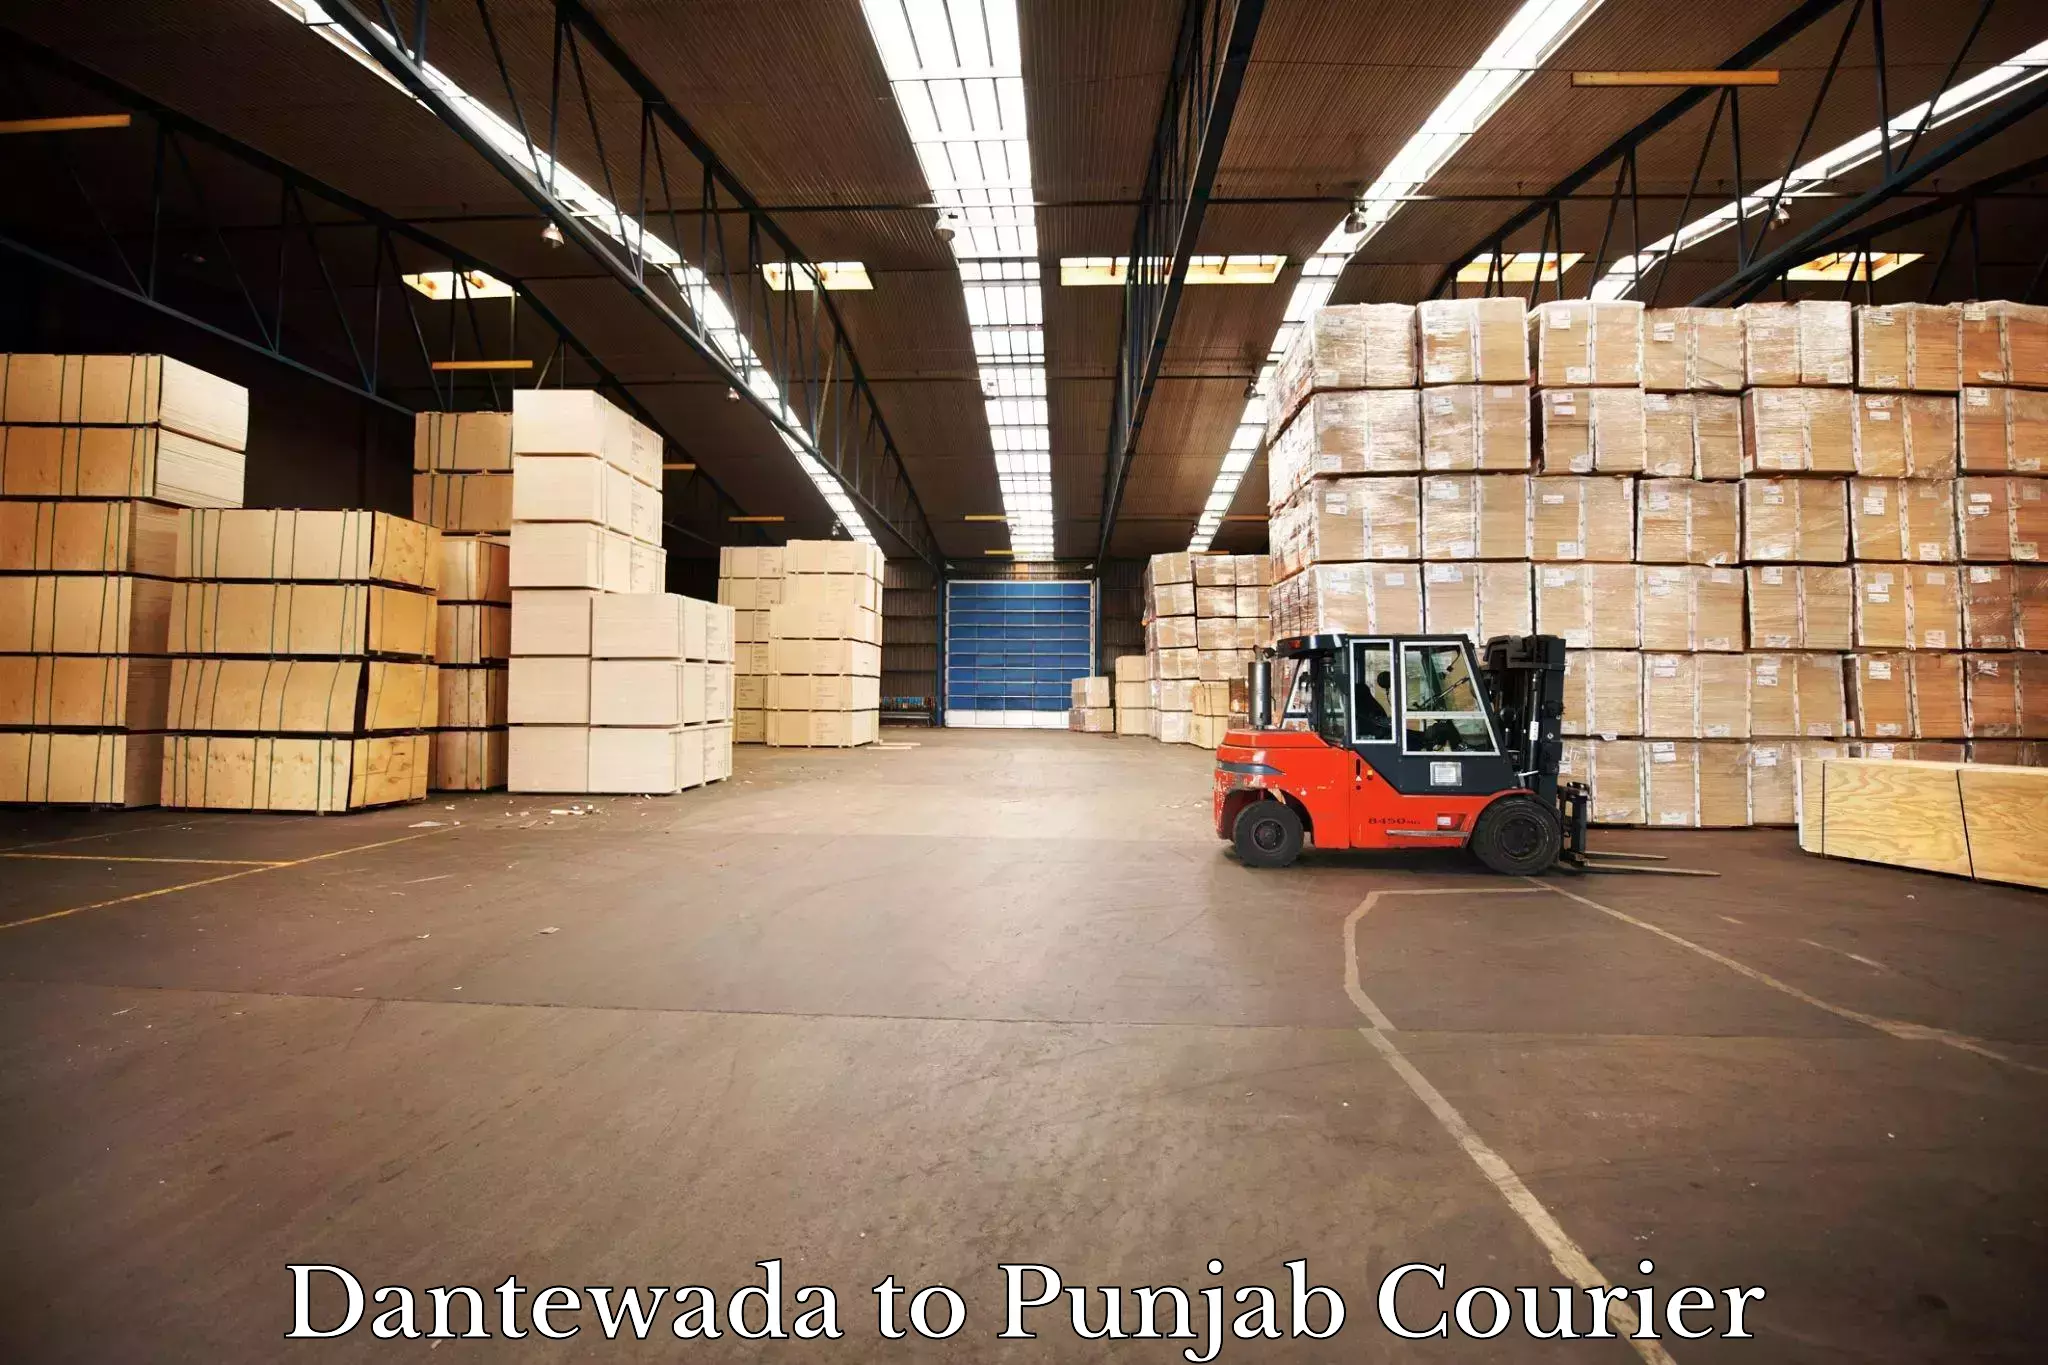 Global courier networks Dantewada to Punjab